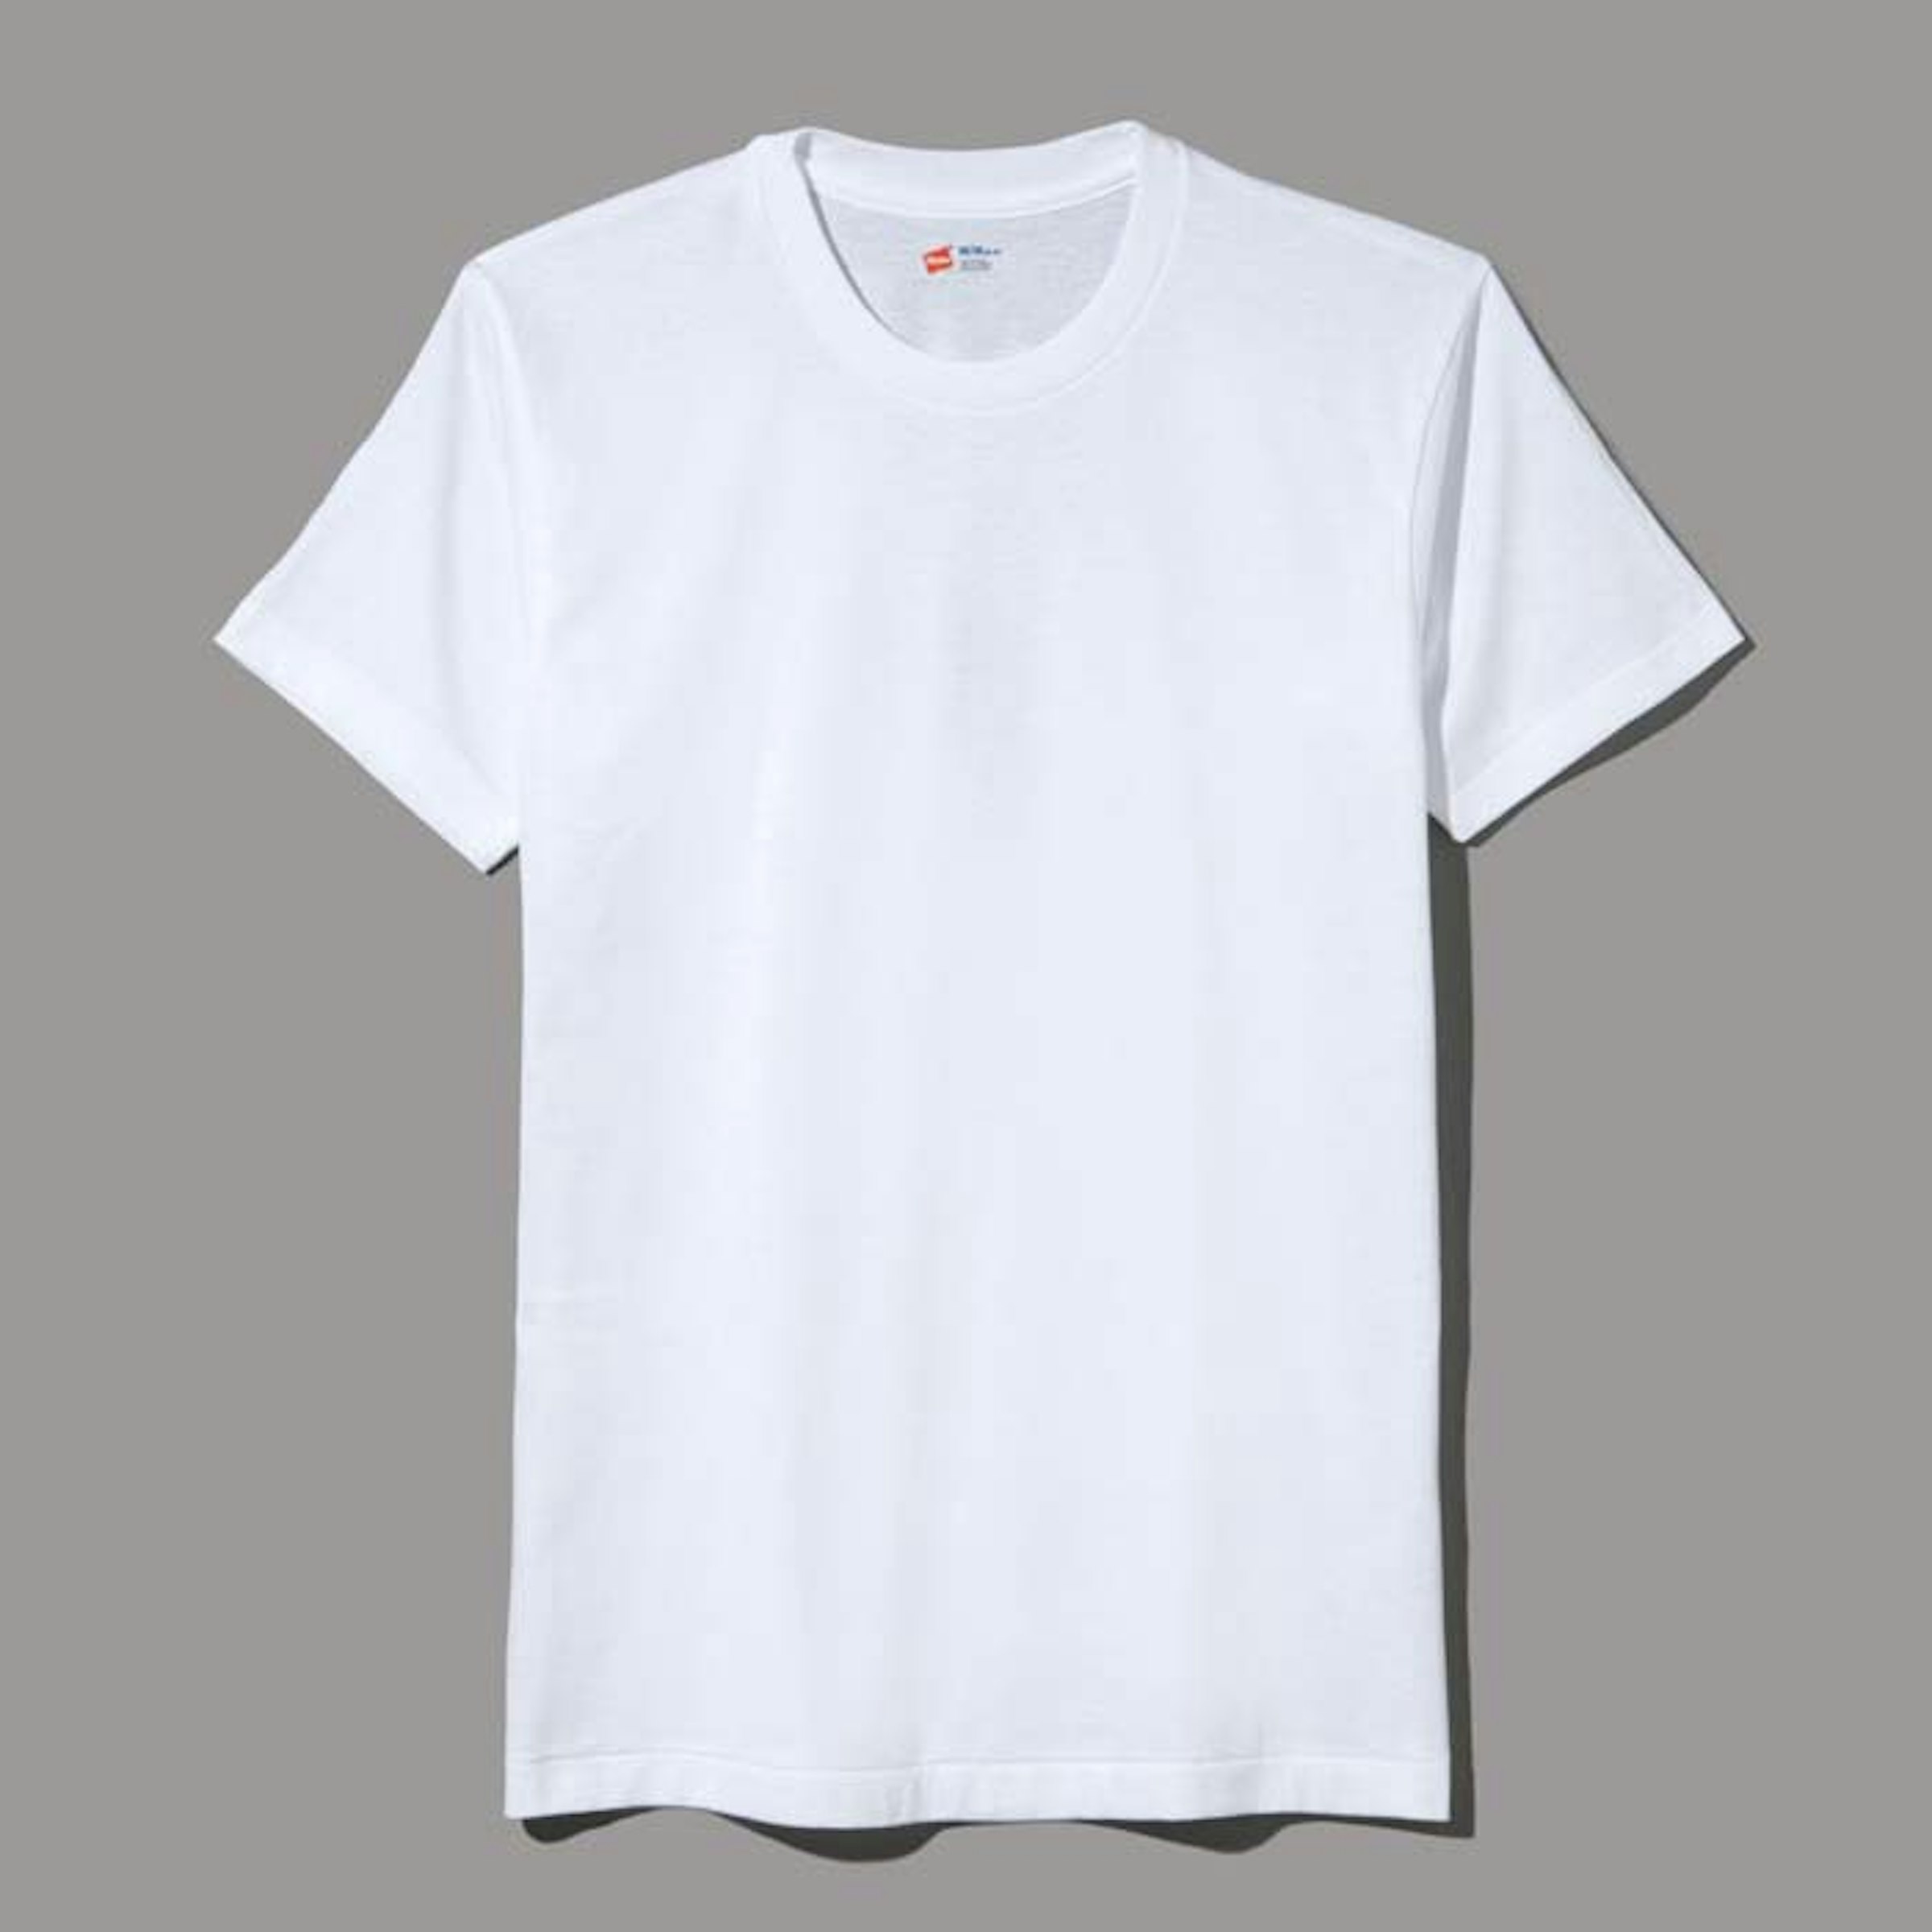 3P Blue Label Crew Neck T-Shirt - 2,860 yen (tax included)